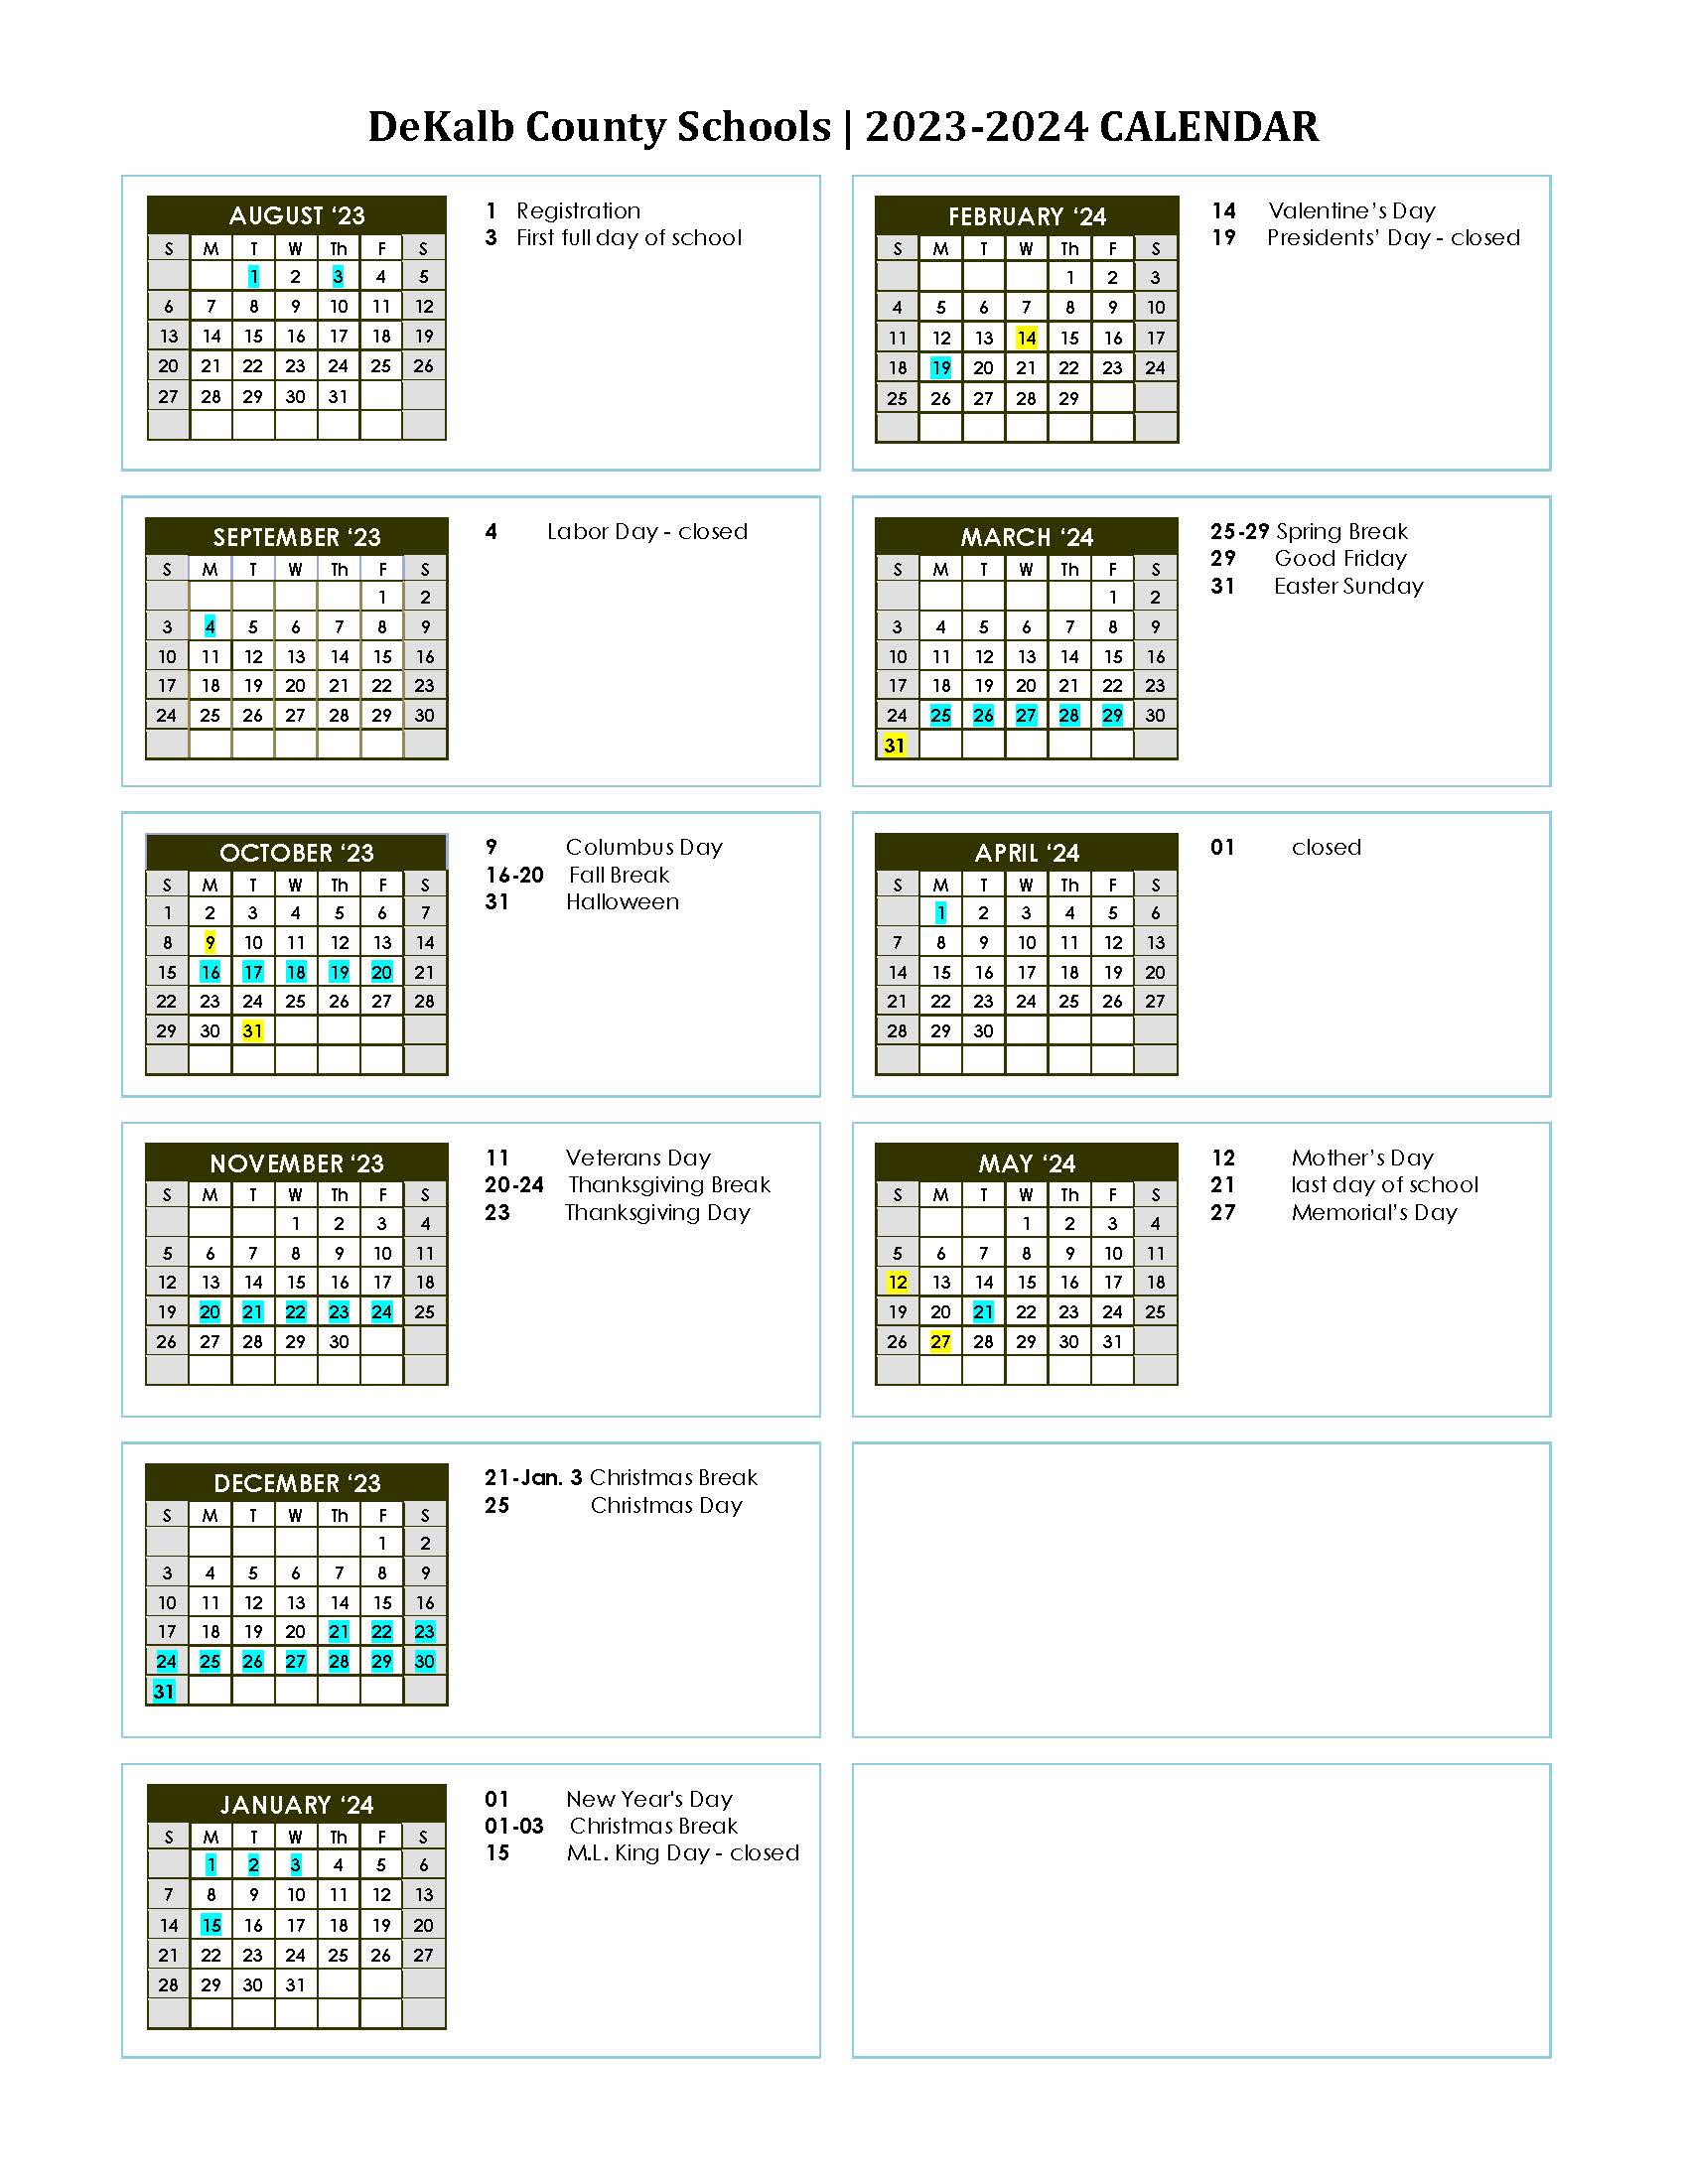 dekalb-county-school-calendar-2024-barry-carmela